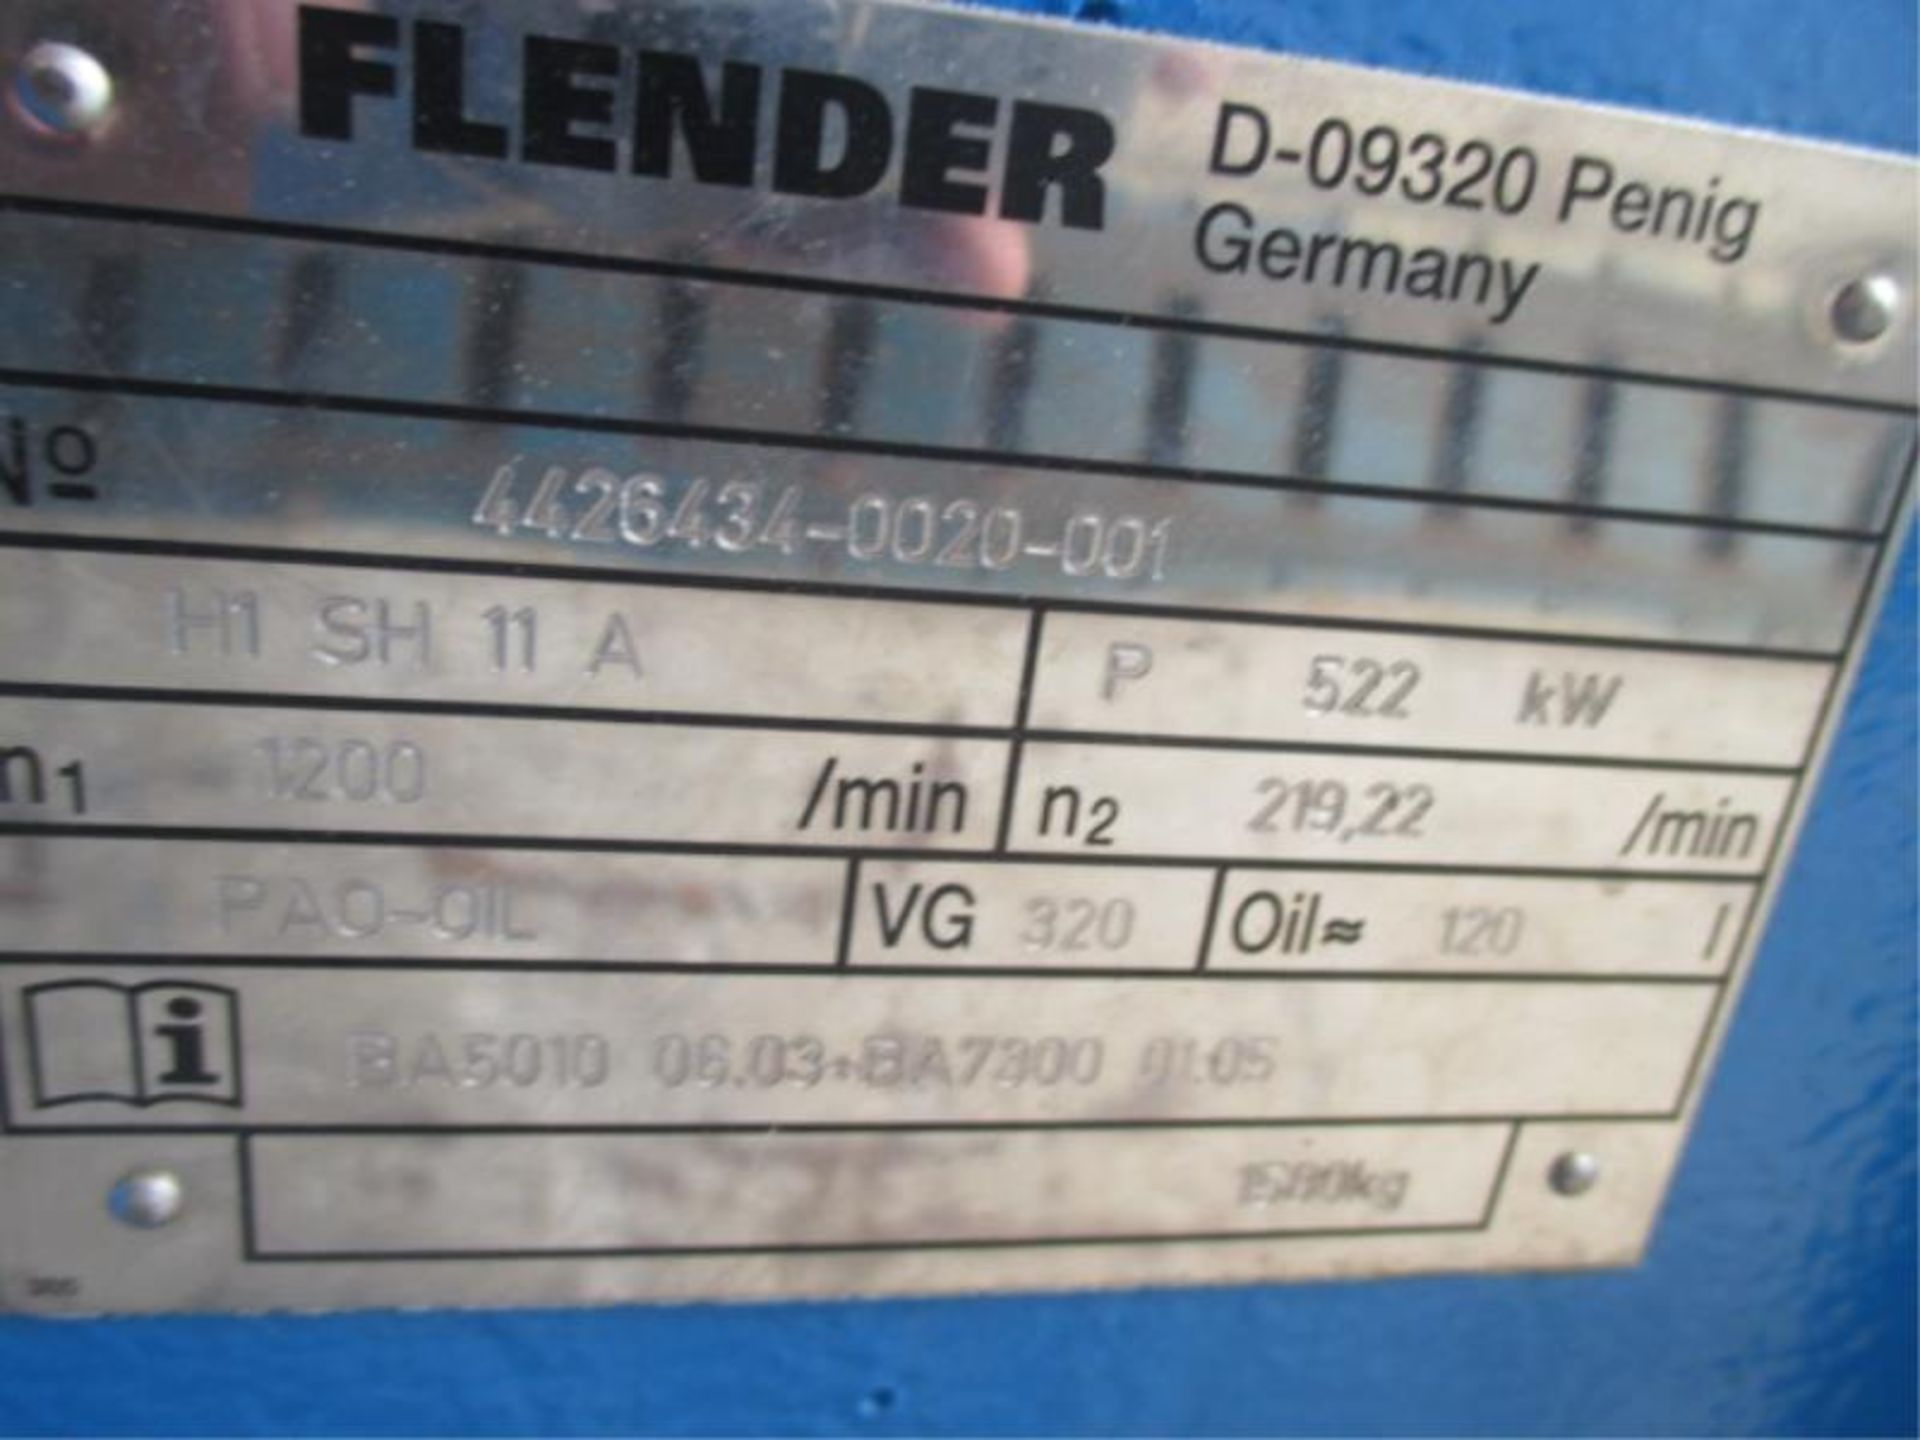 New Flender Hydraulic Gear Box - No. 4426434, Model: D-09320, Penig Germany - Image 9 of 10